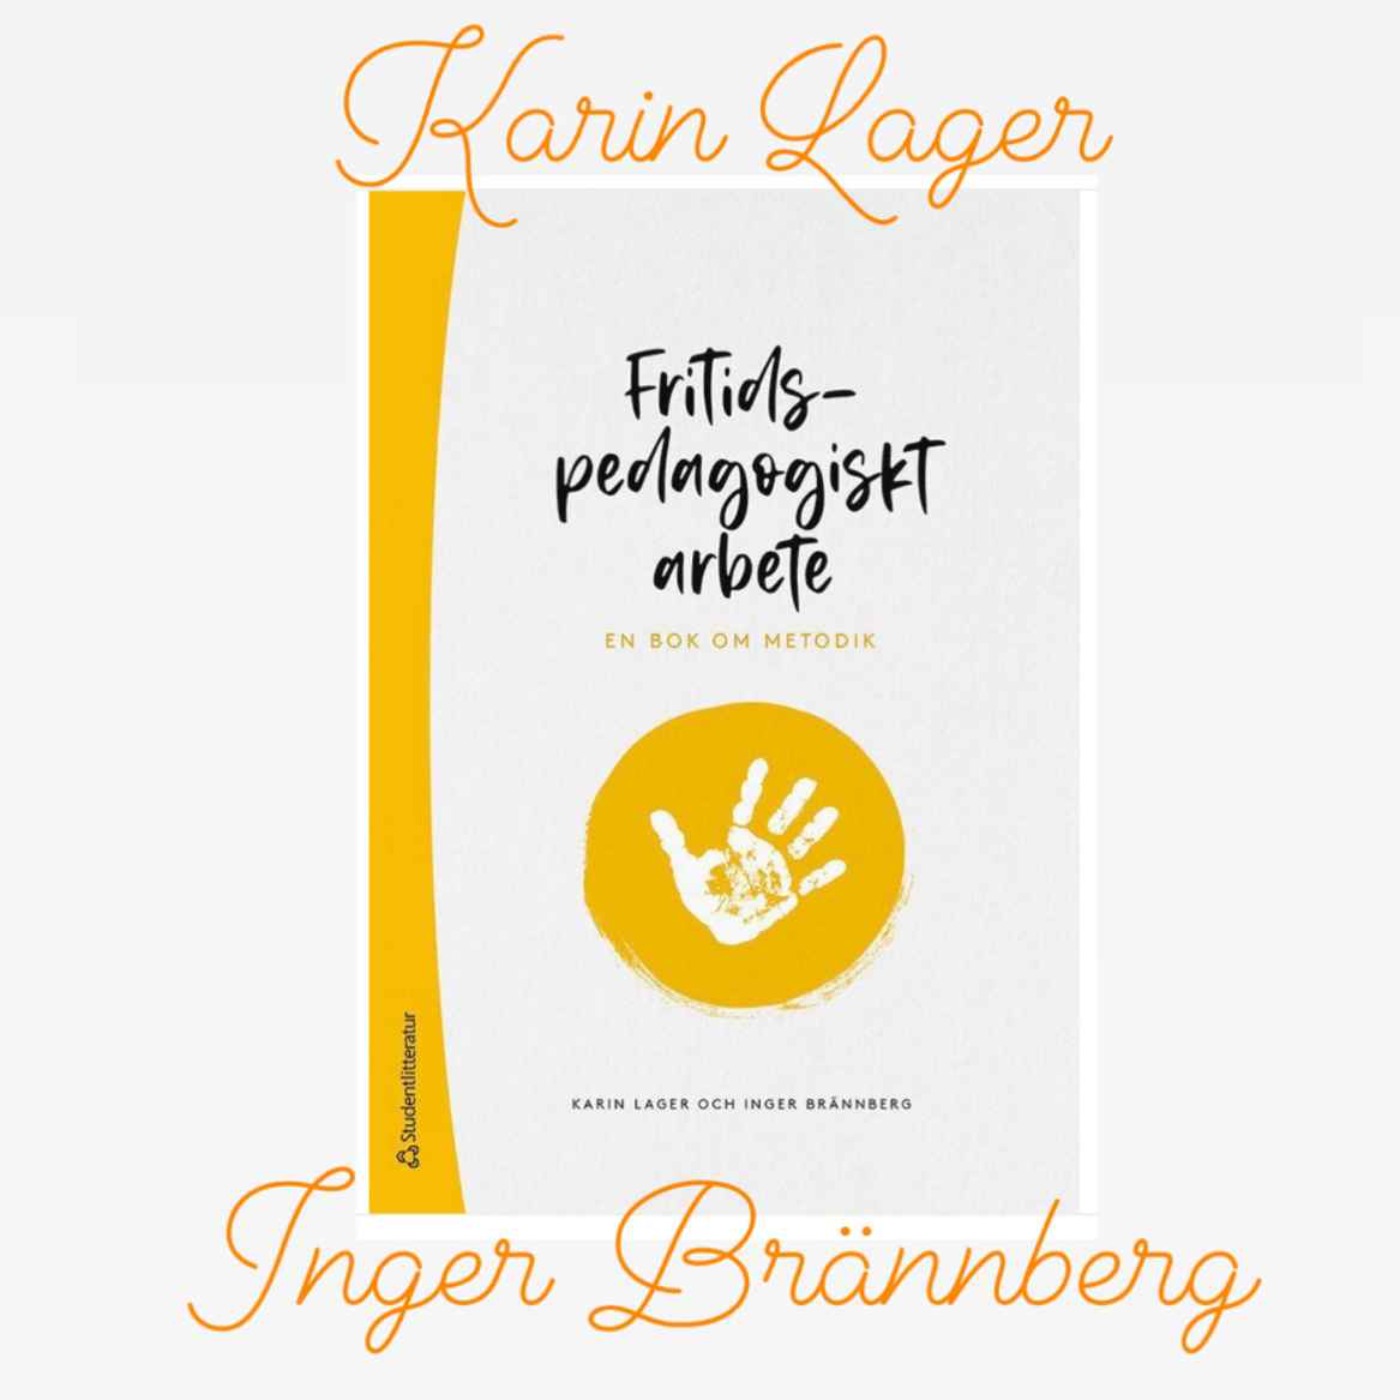 #11 Karin Lager & Inger Brännberg gästar podden!